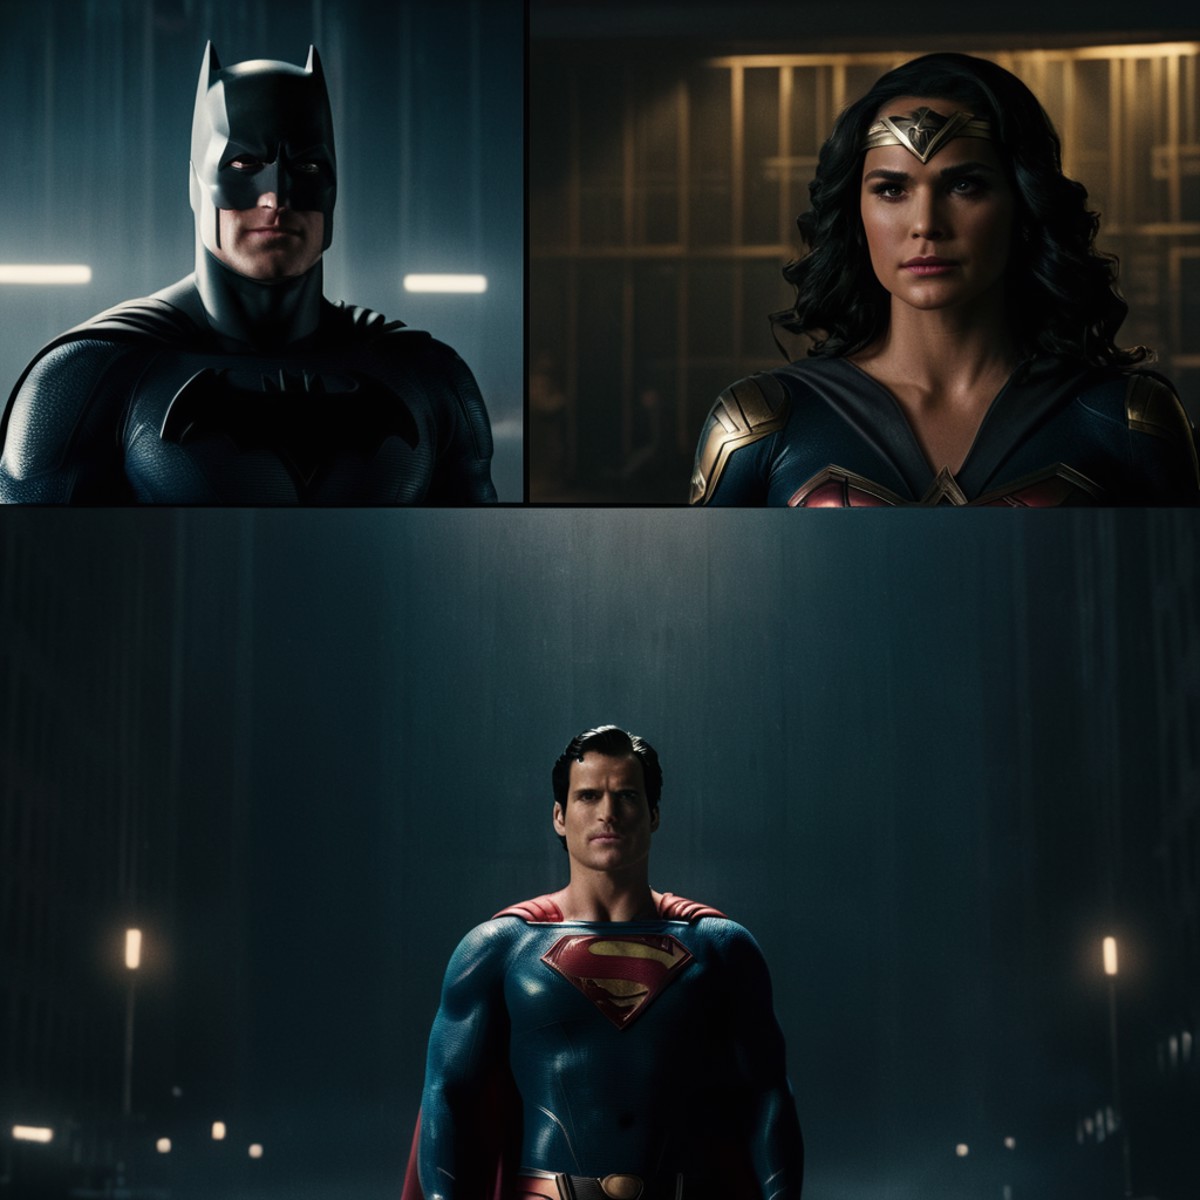 cinematic film still of  <lora:Split Screen Style:1> 
a series of three different images of superman, batman, wonder woman...